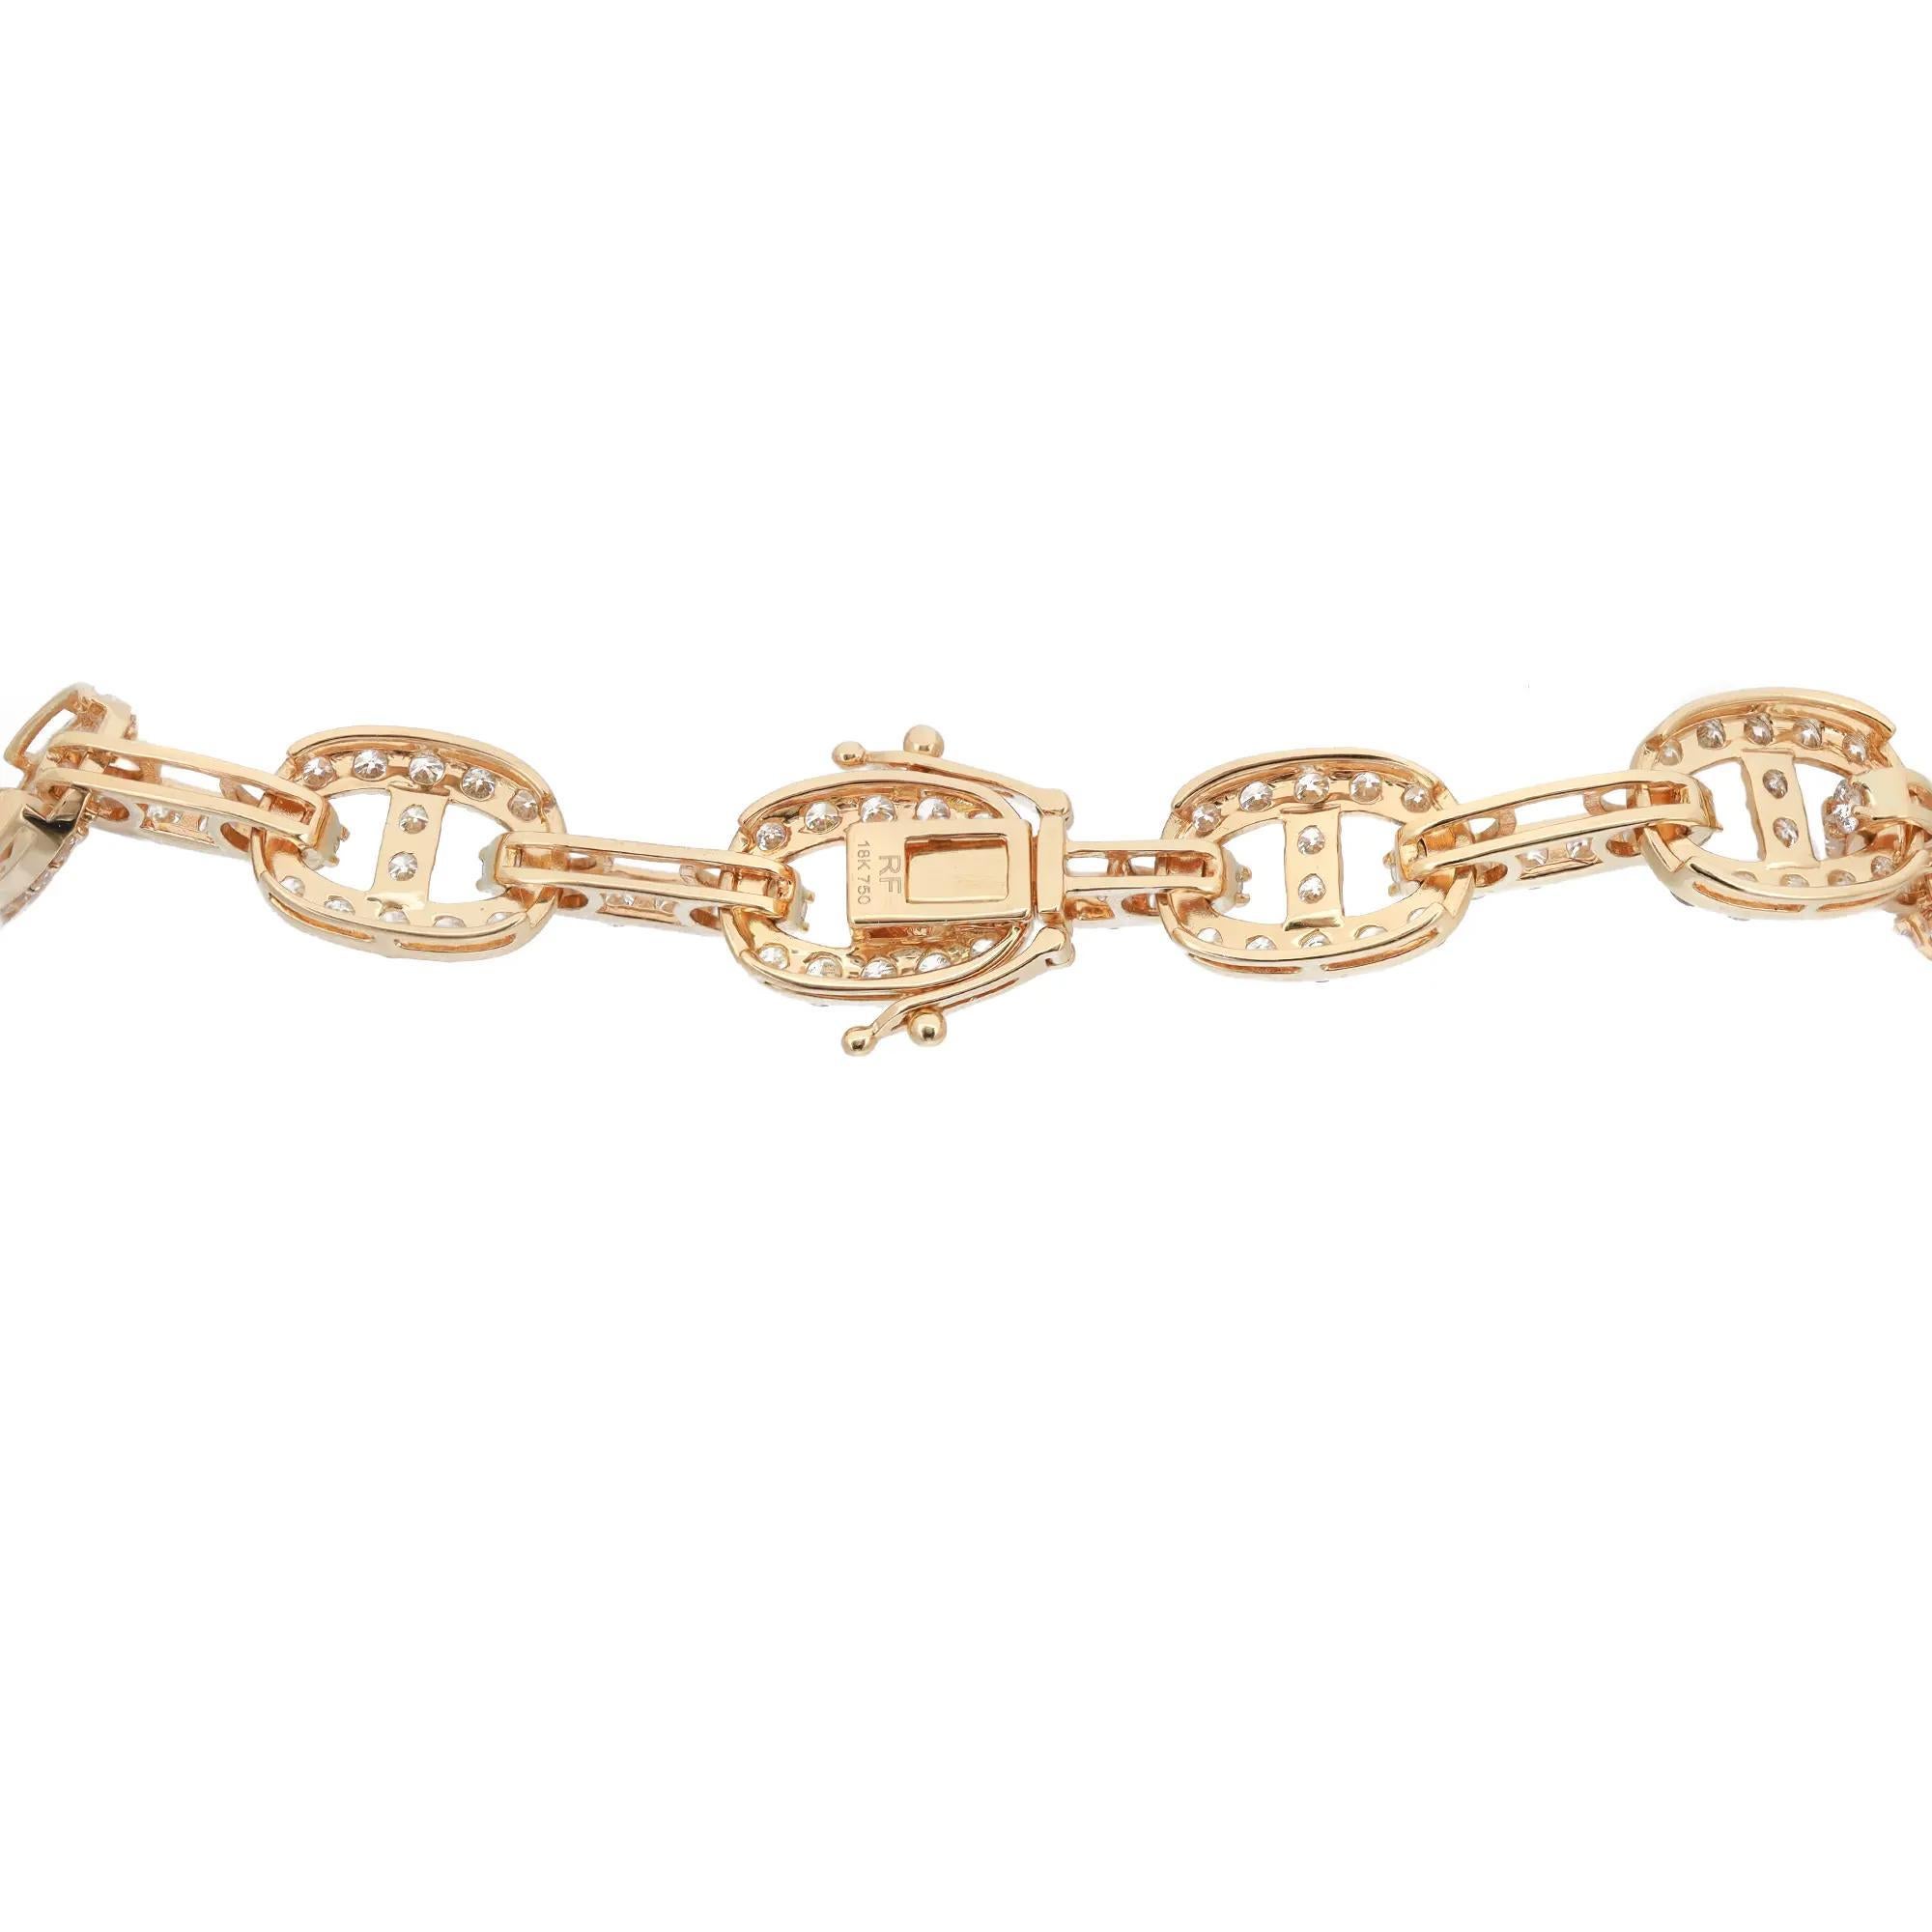 18k gold mariner link chain